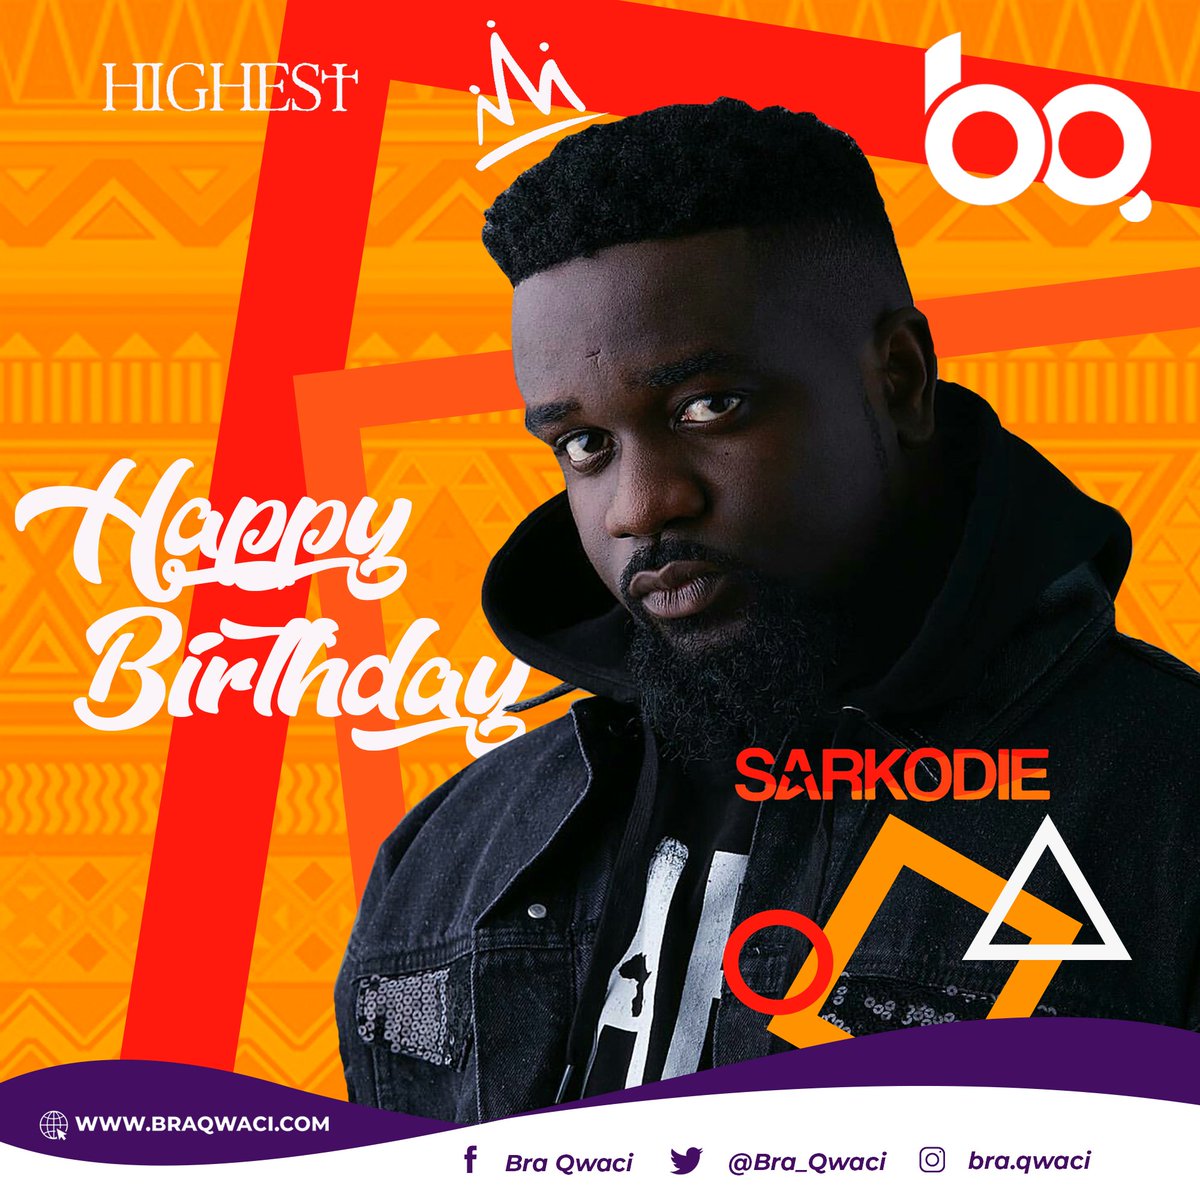 Happy Birthday King @sarkodie , Africa’s most decorated rapper. Long live King @sarkodie!
Art by: @kofi_money 
#sarkodie #birthday #julyborn #livelongerbetter #king #followforfollowback #likeforfollow #likeforlikes #braqwacidotcom #bloggerstyle #blogger